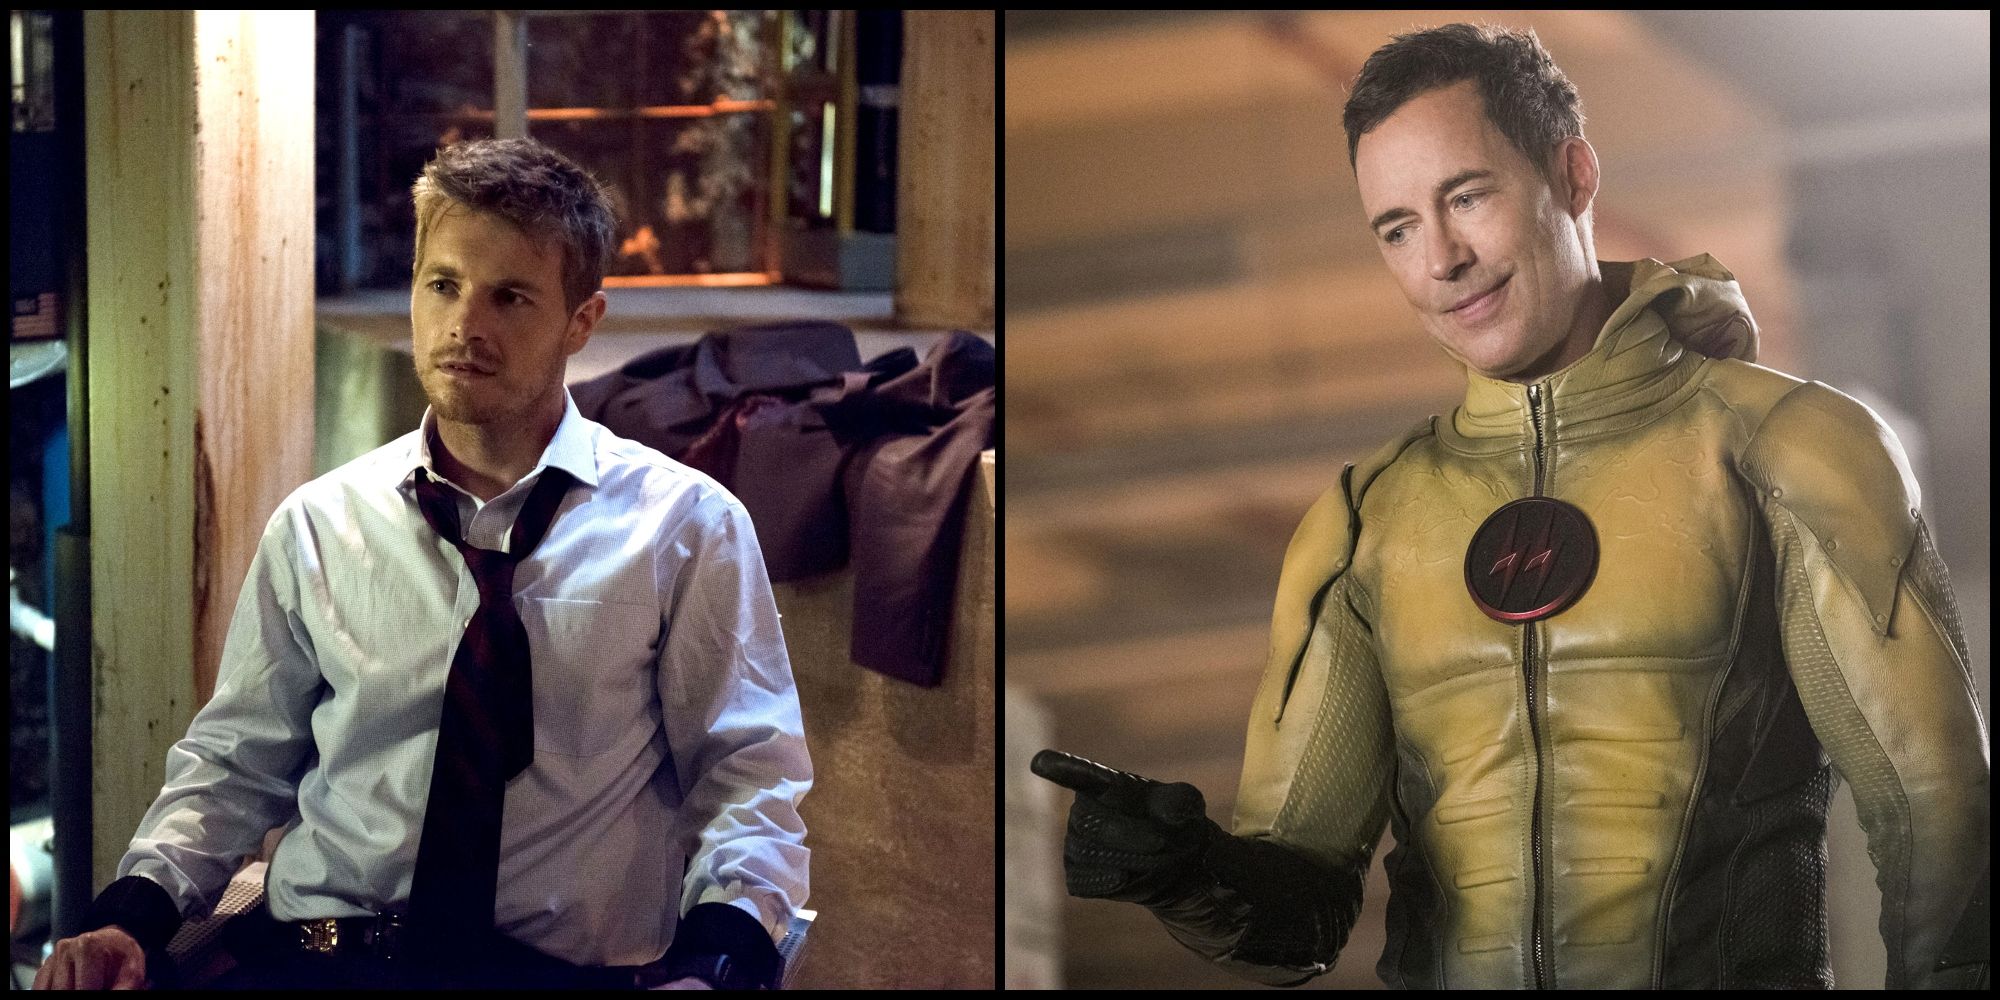 The Flash: How Is Eddie Thawne Related To Eobard Thawne?